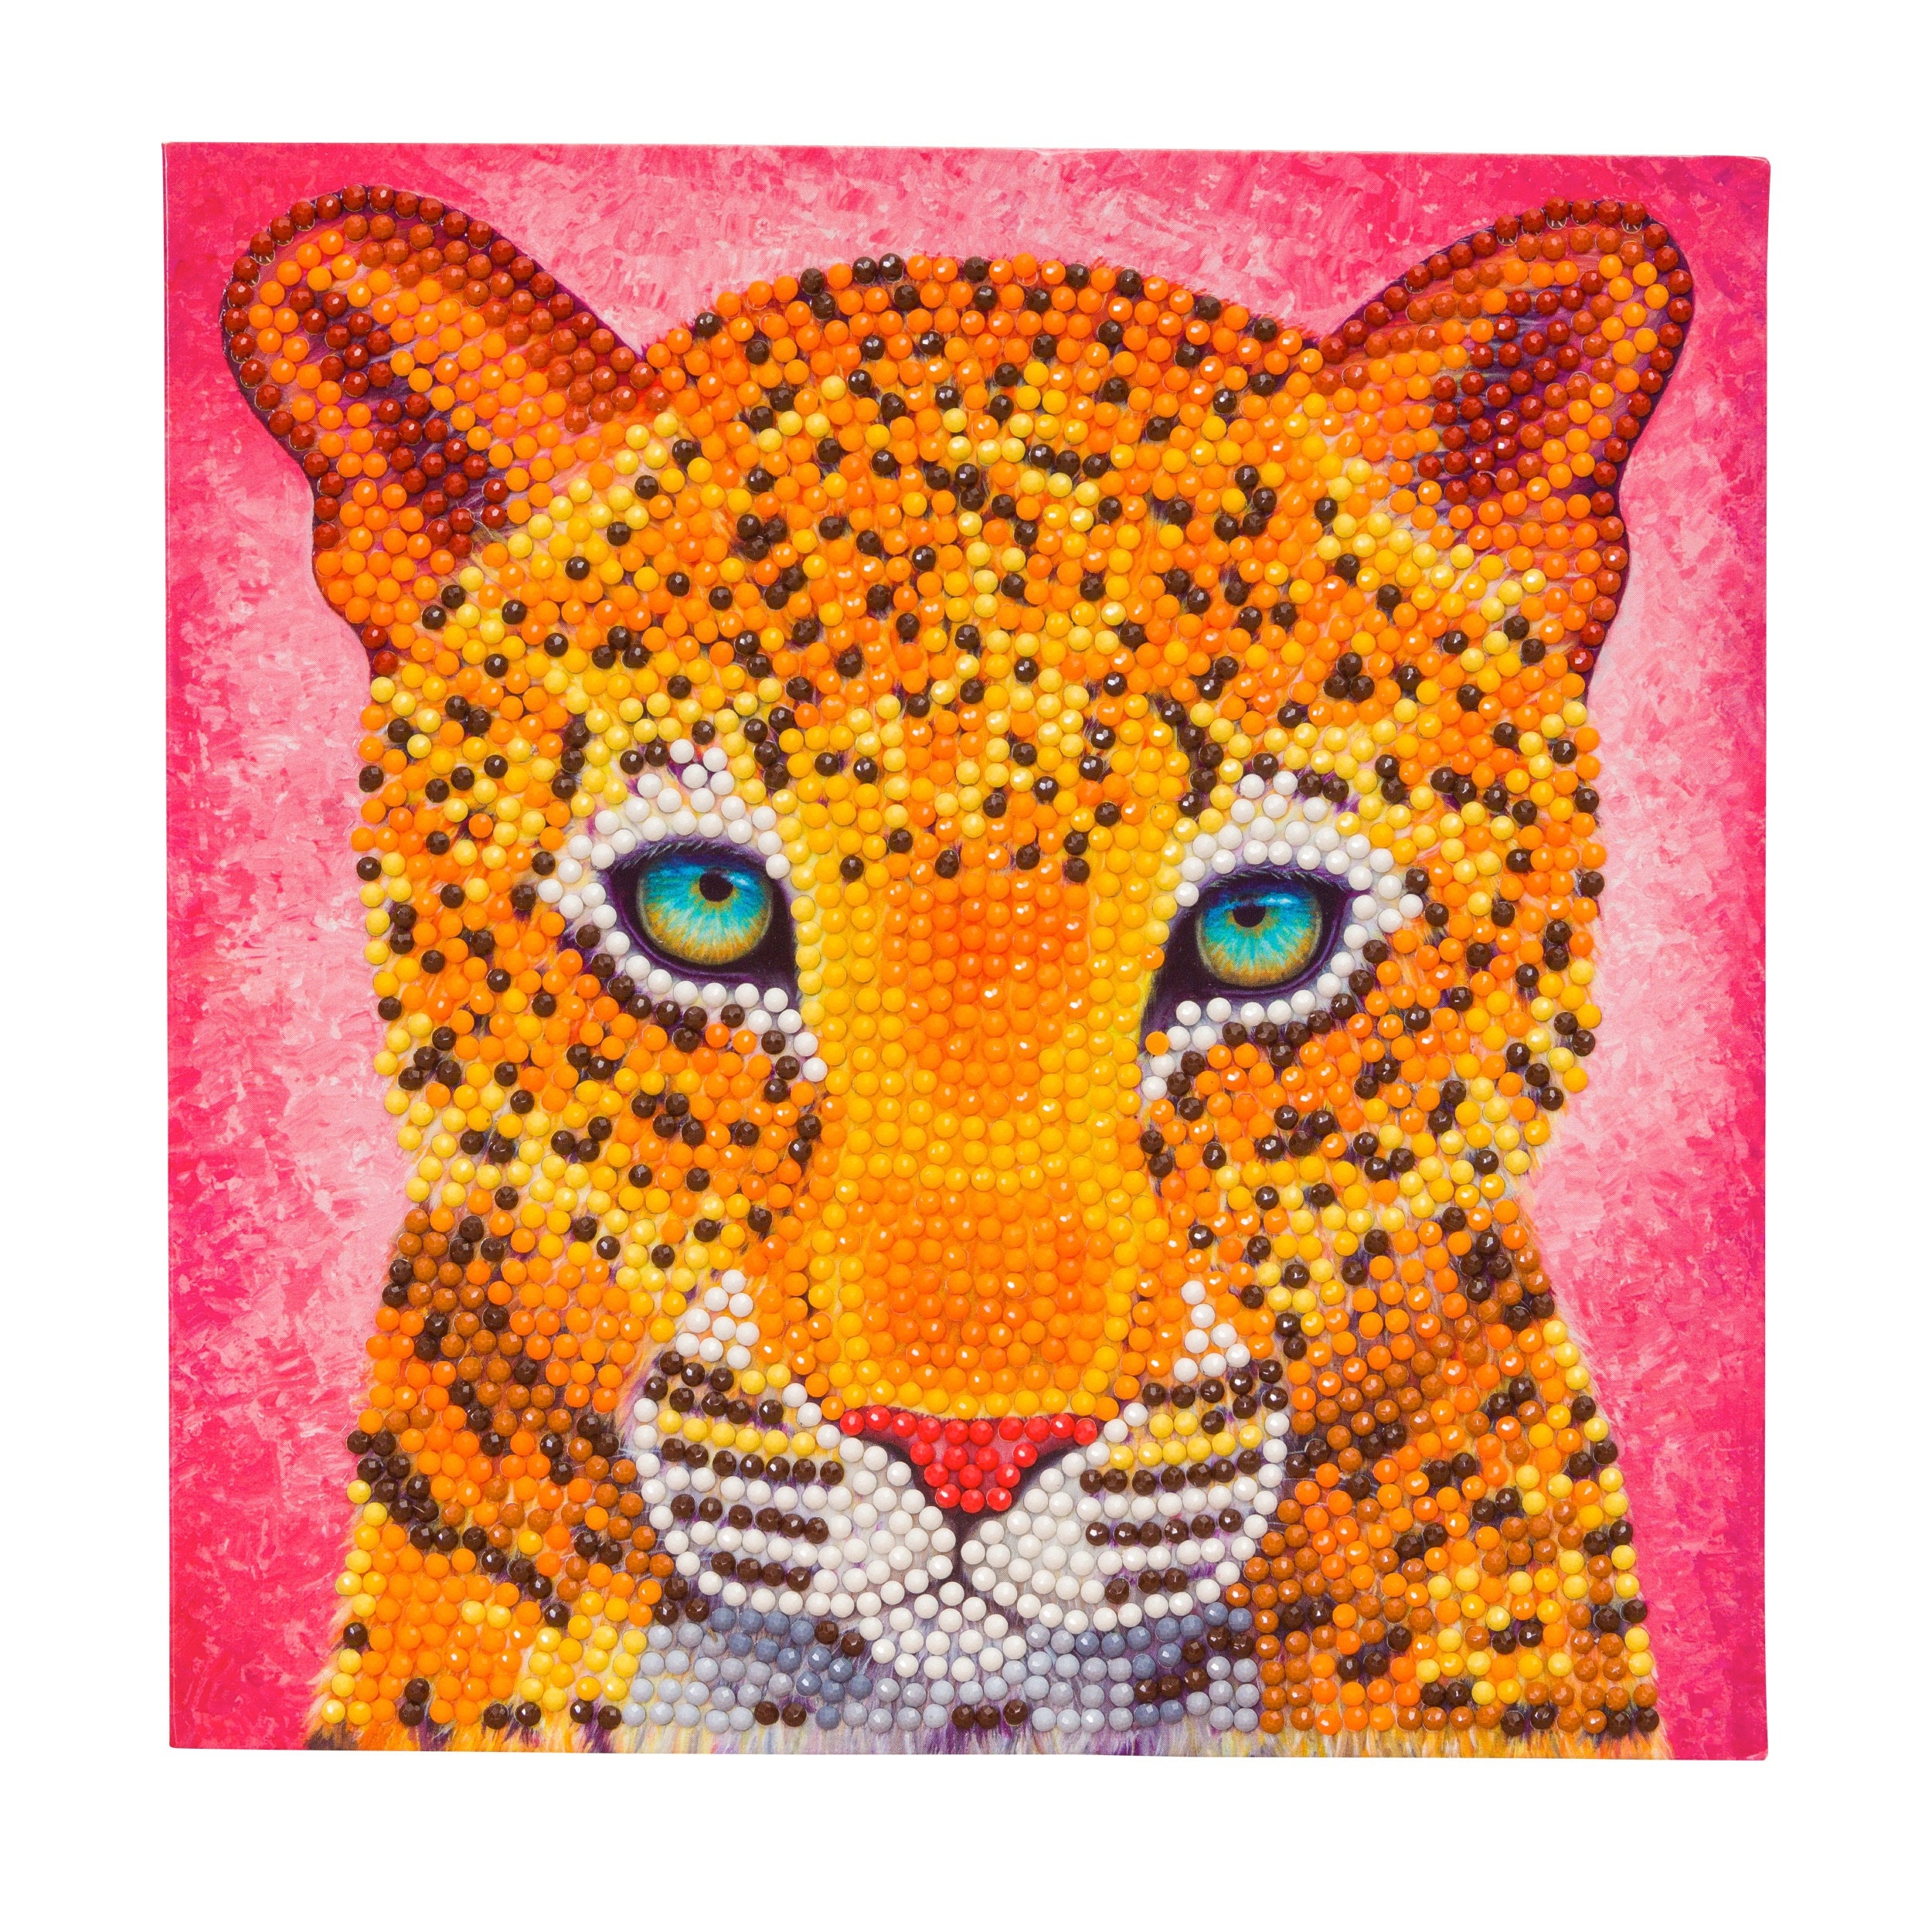 Craft Medley Cat Diamond Painting Art Kit